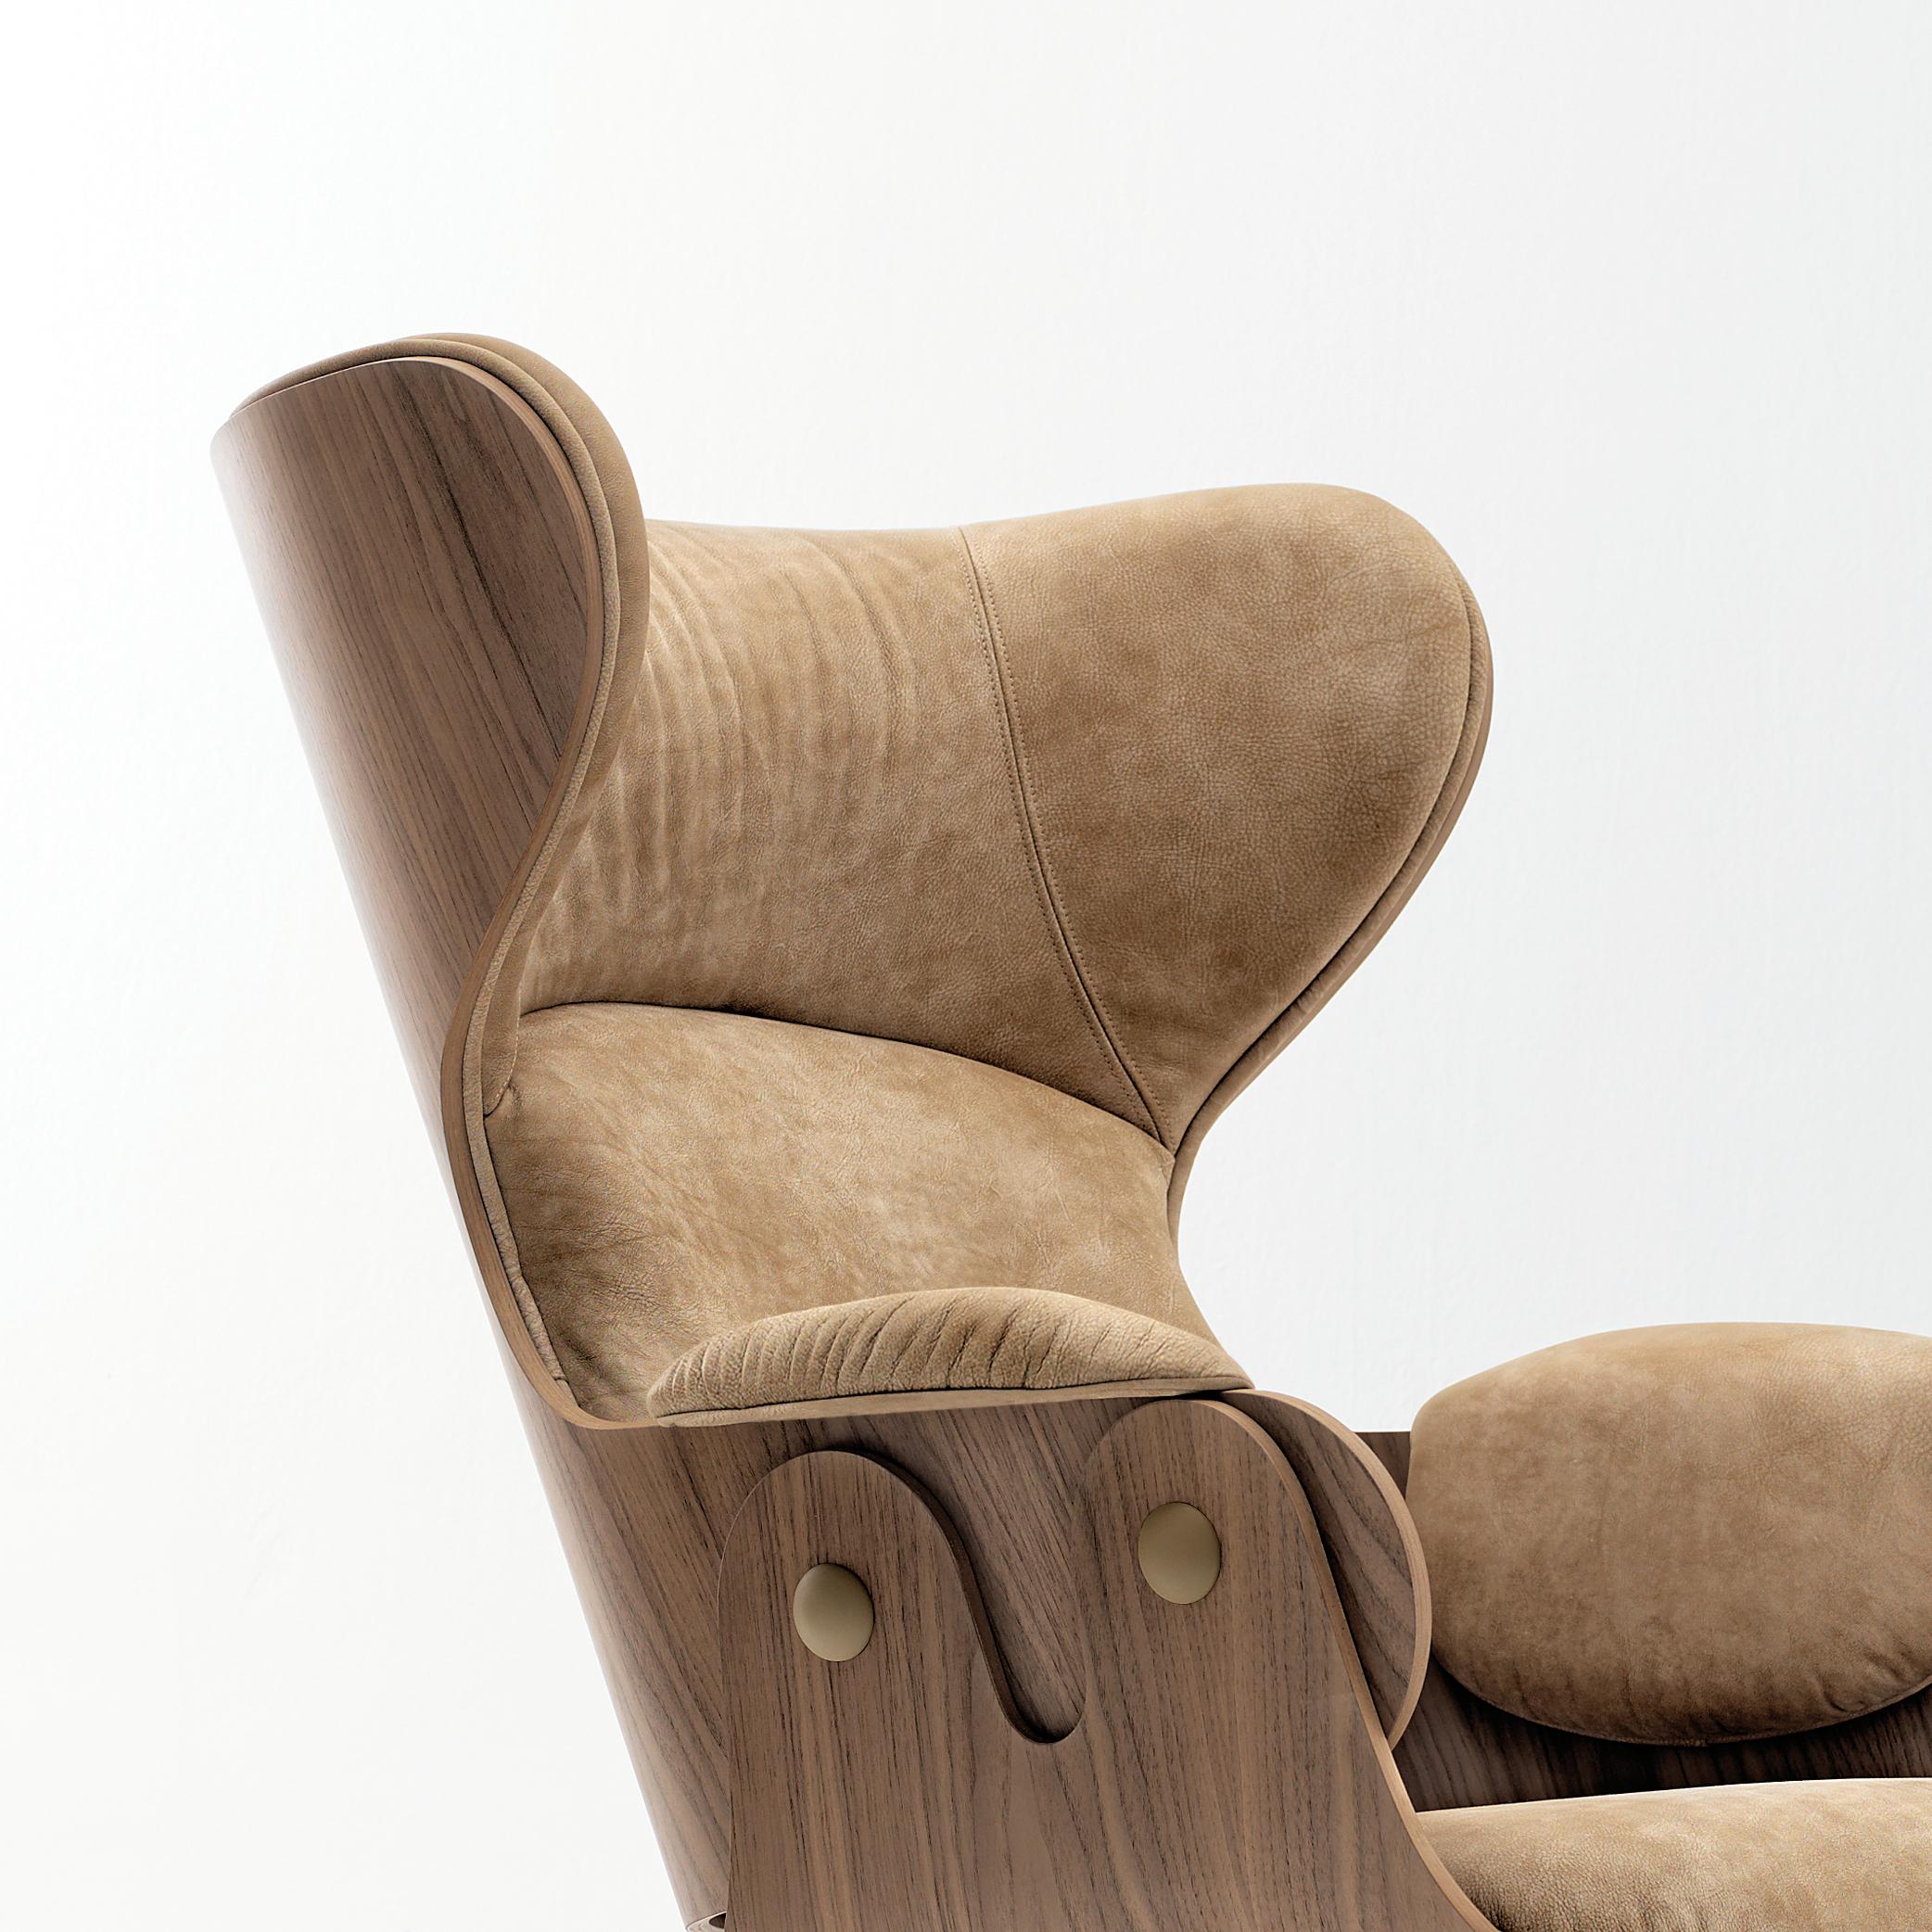 Modern Jaime Hayon, Contemporary, Playwood Walnut Leather Upholstery Lounger Armchair 